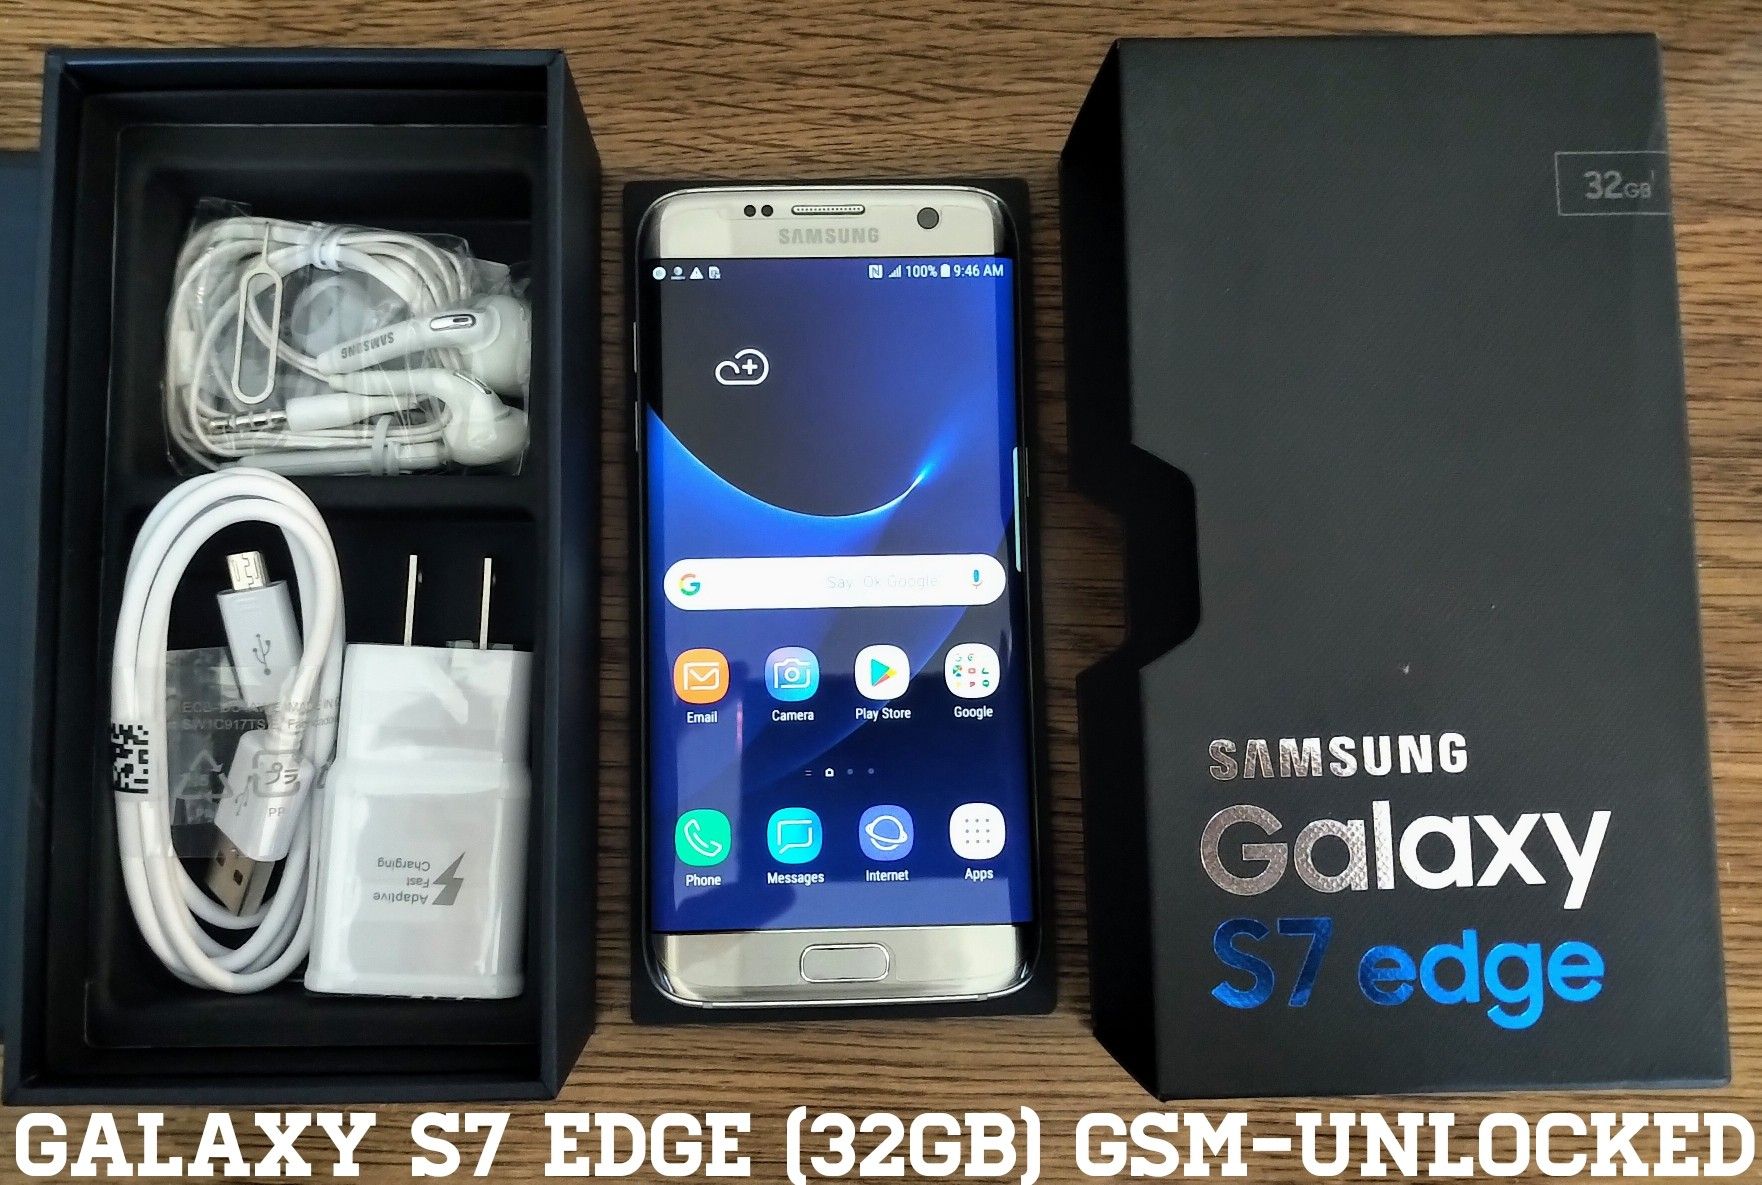 Galaxy S7 Edge (32GB) GSM-UNLOCKED (Like-New)